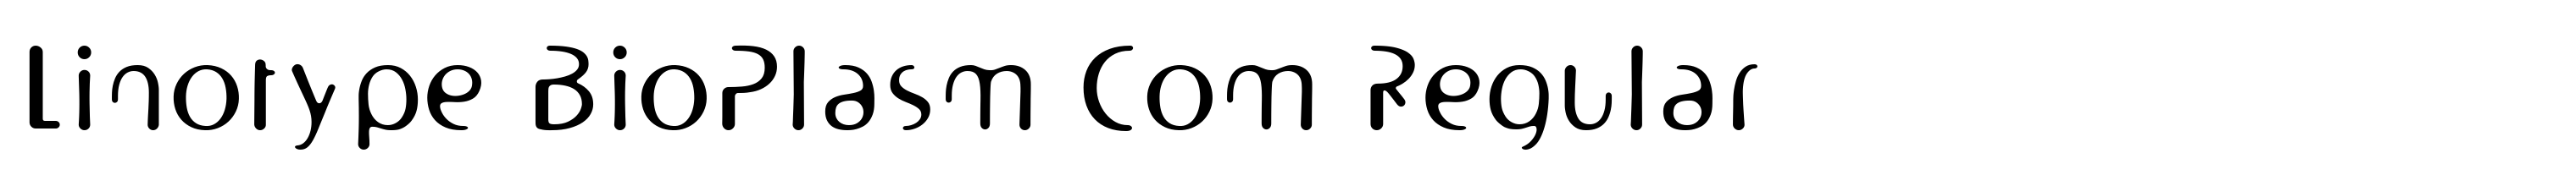 Linotype BioPlasm Com Regular